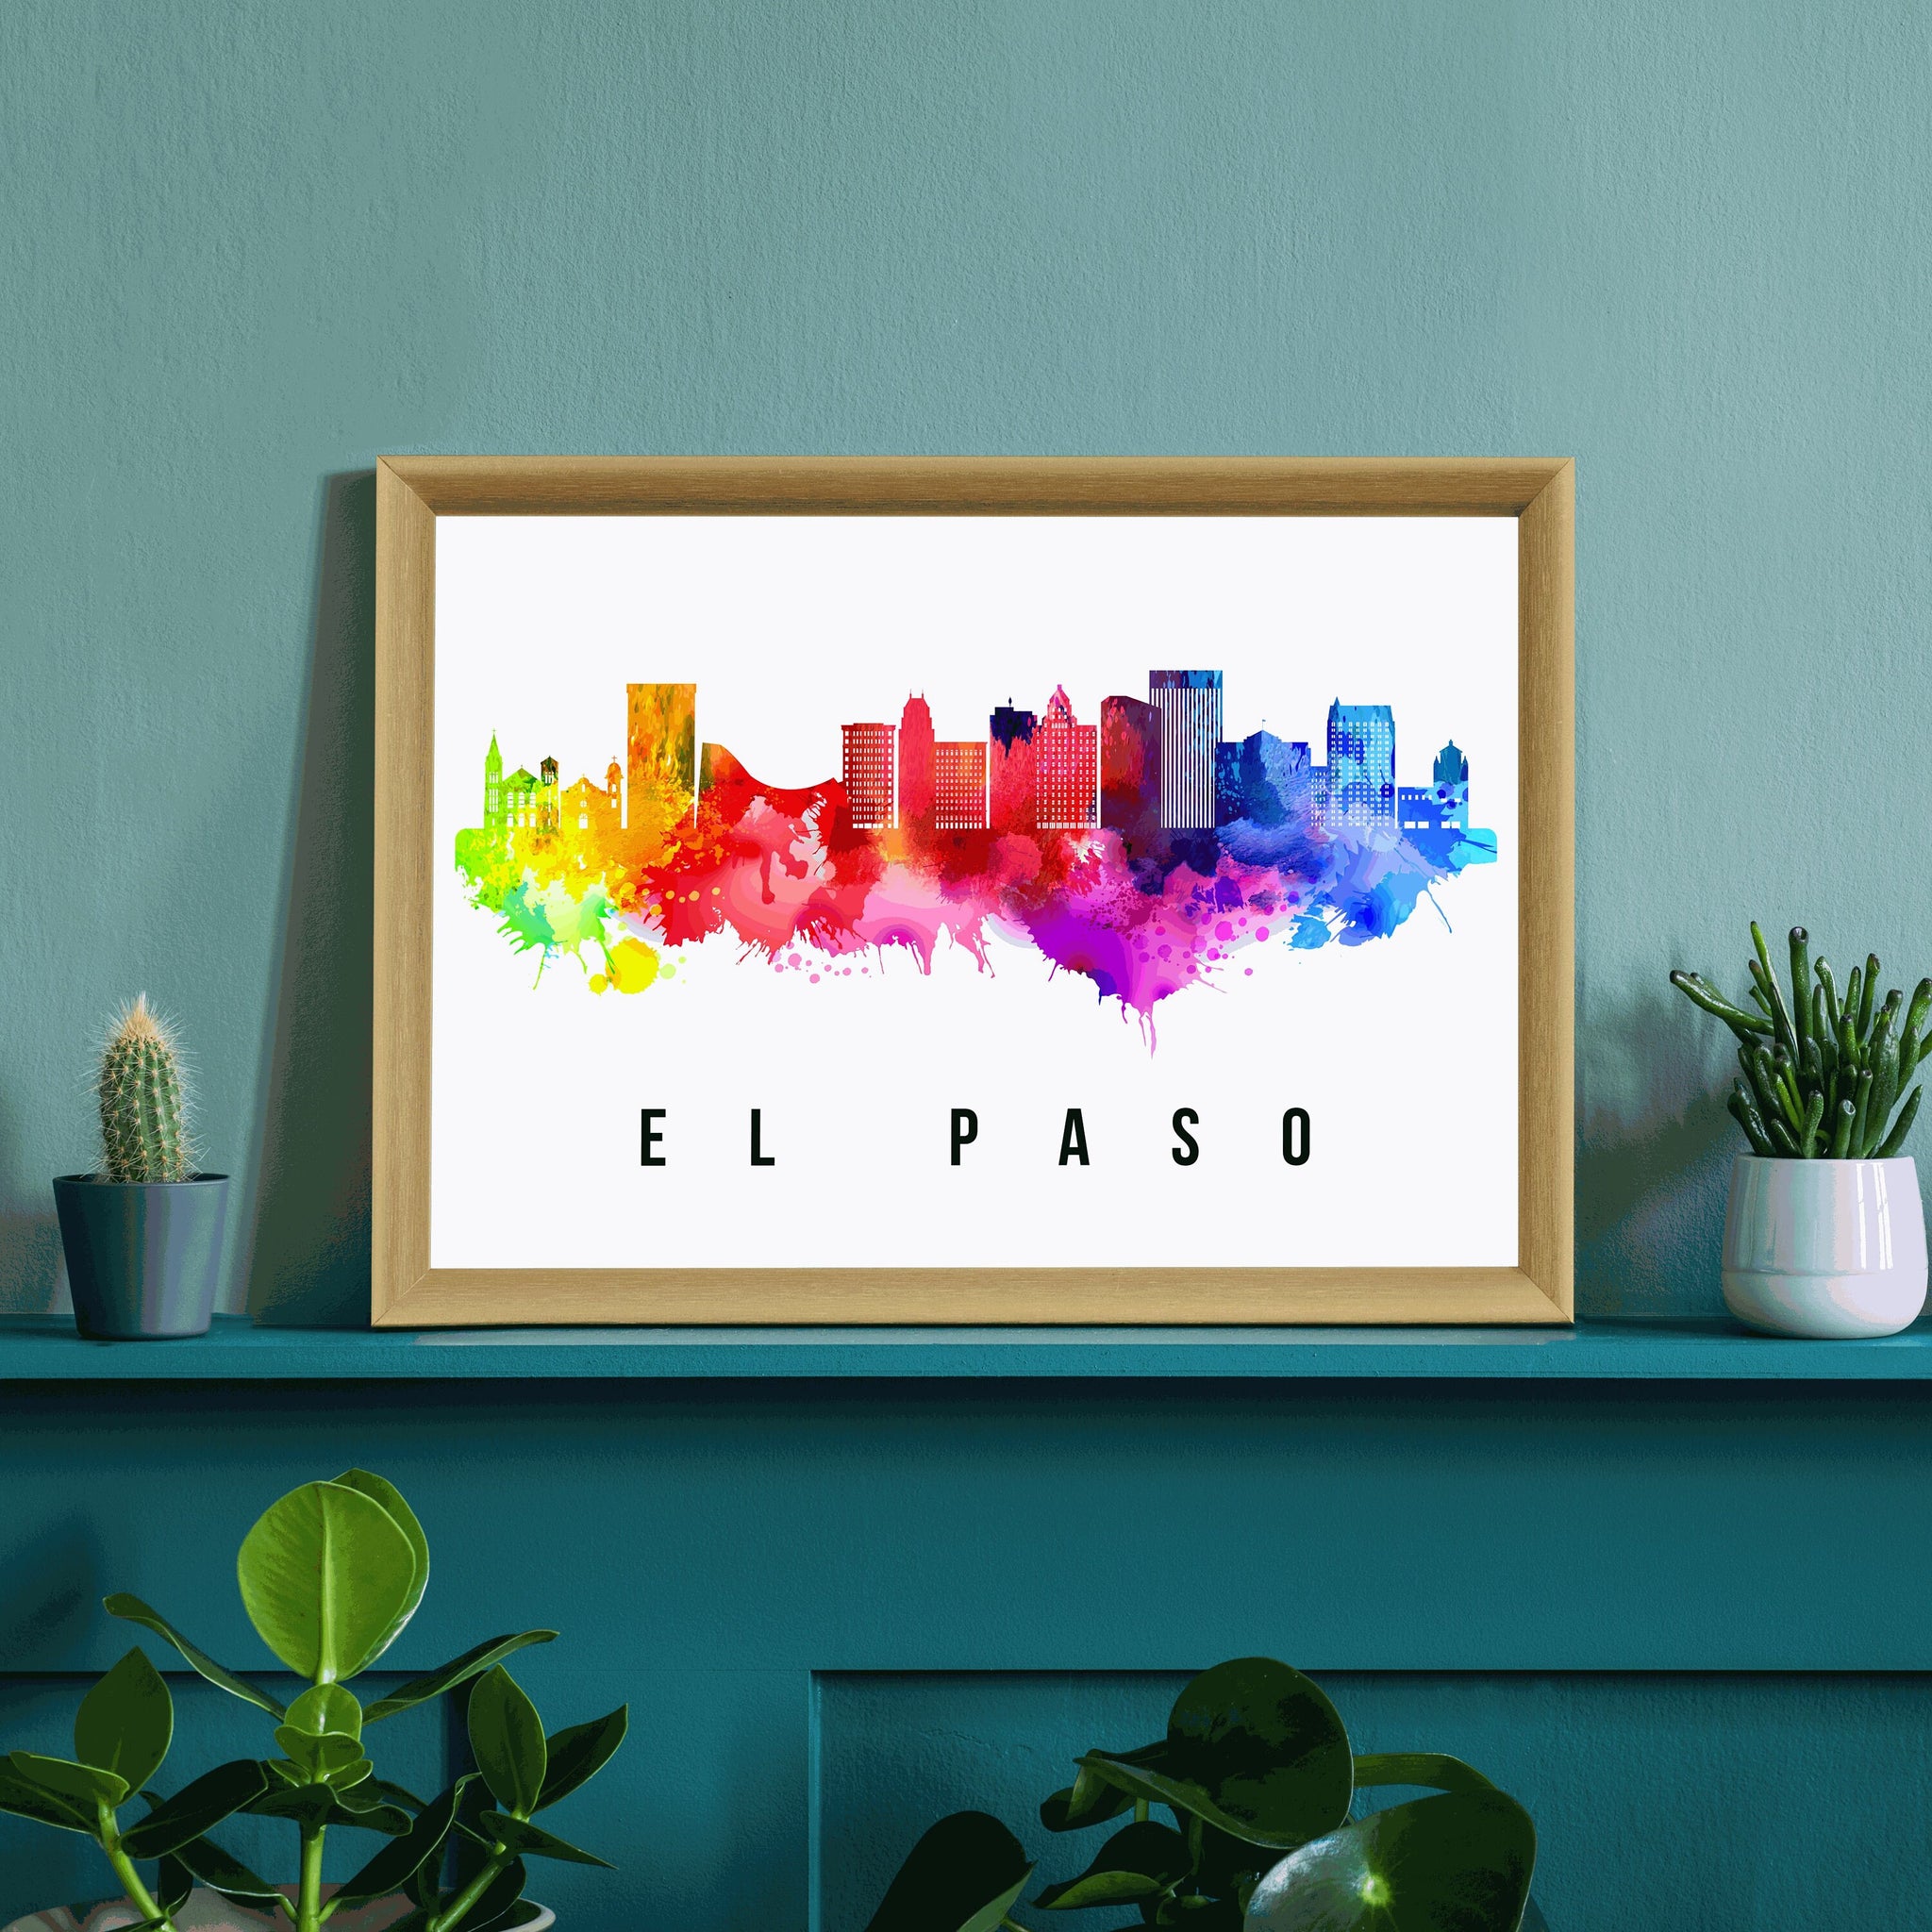 El Paso Texas Skyline Poster, El Paso Texas Cityscape painting poster, El Paso Texas landmark and cityscape Print, Home art, Office wall art